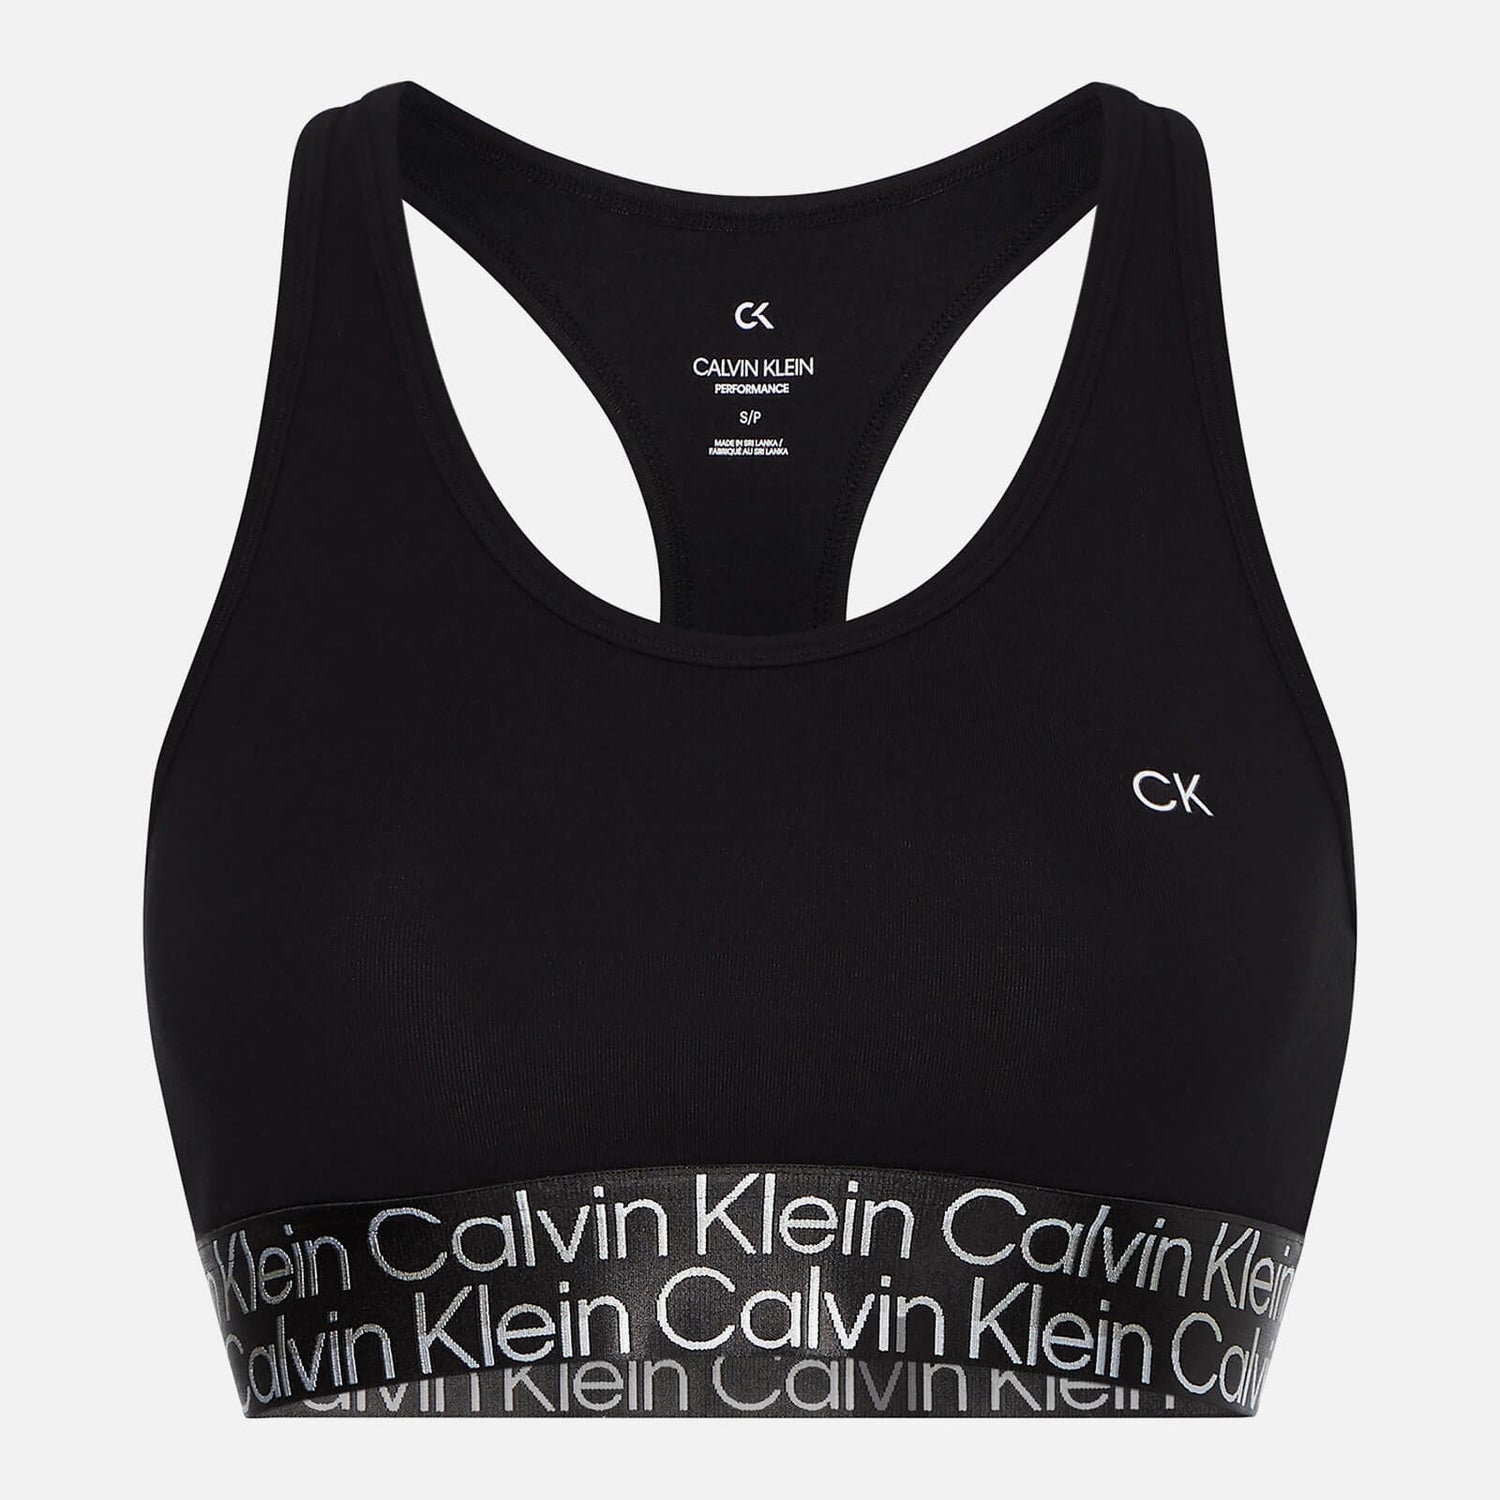 Calvin Klein Performance Women's Low Support Sports Bra - Ck Black - XS